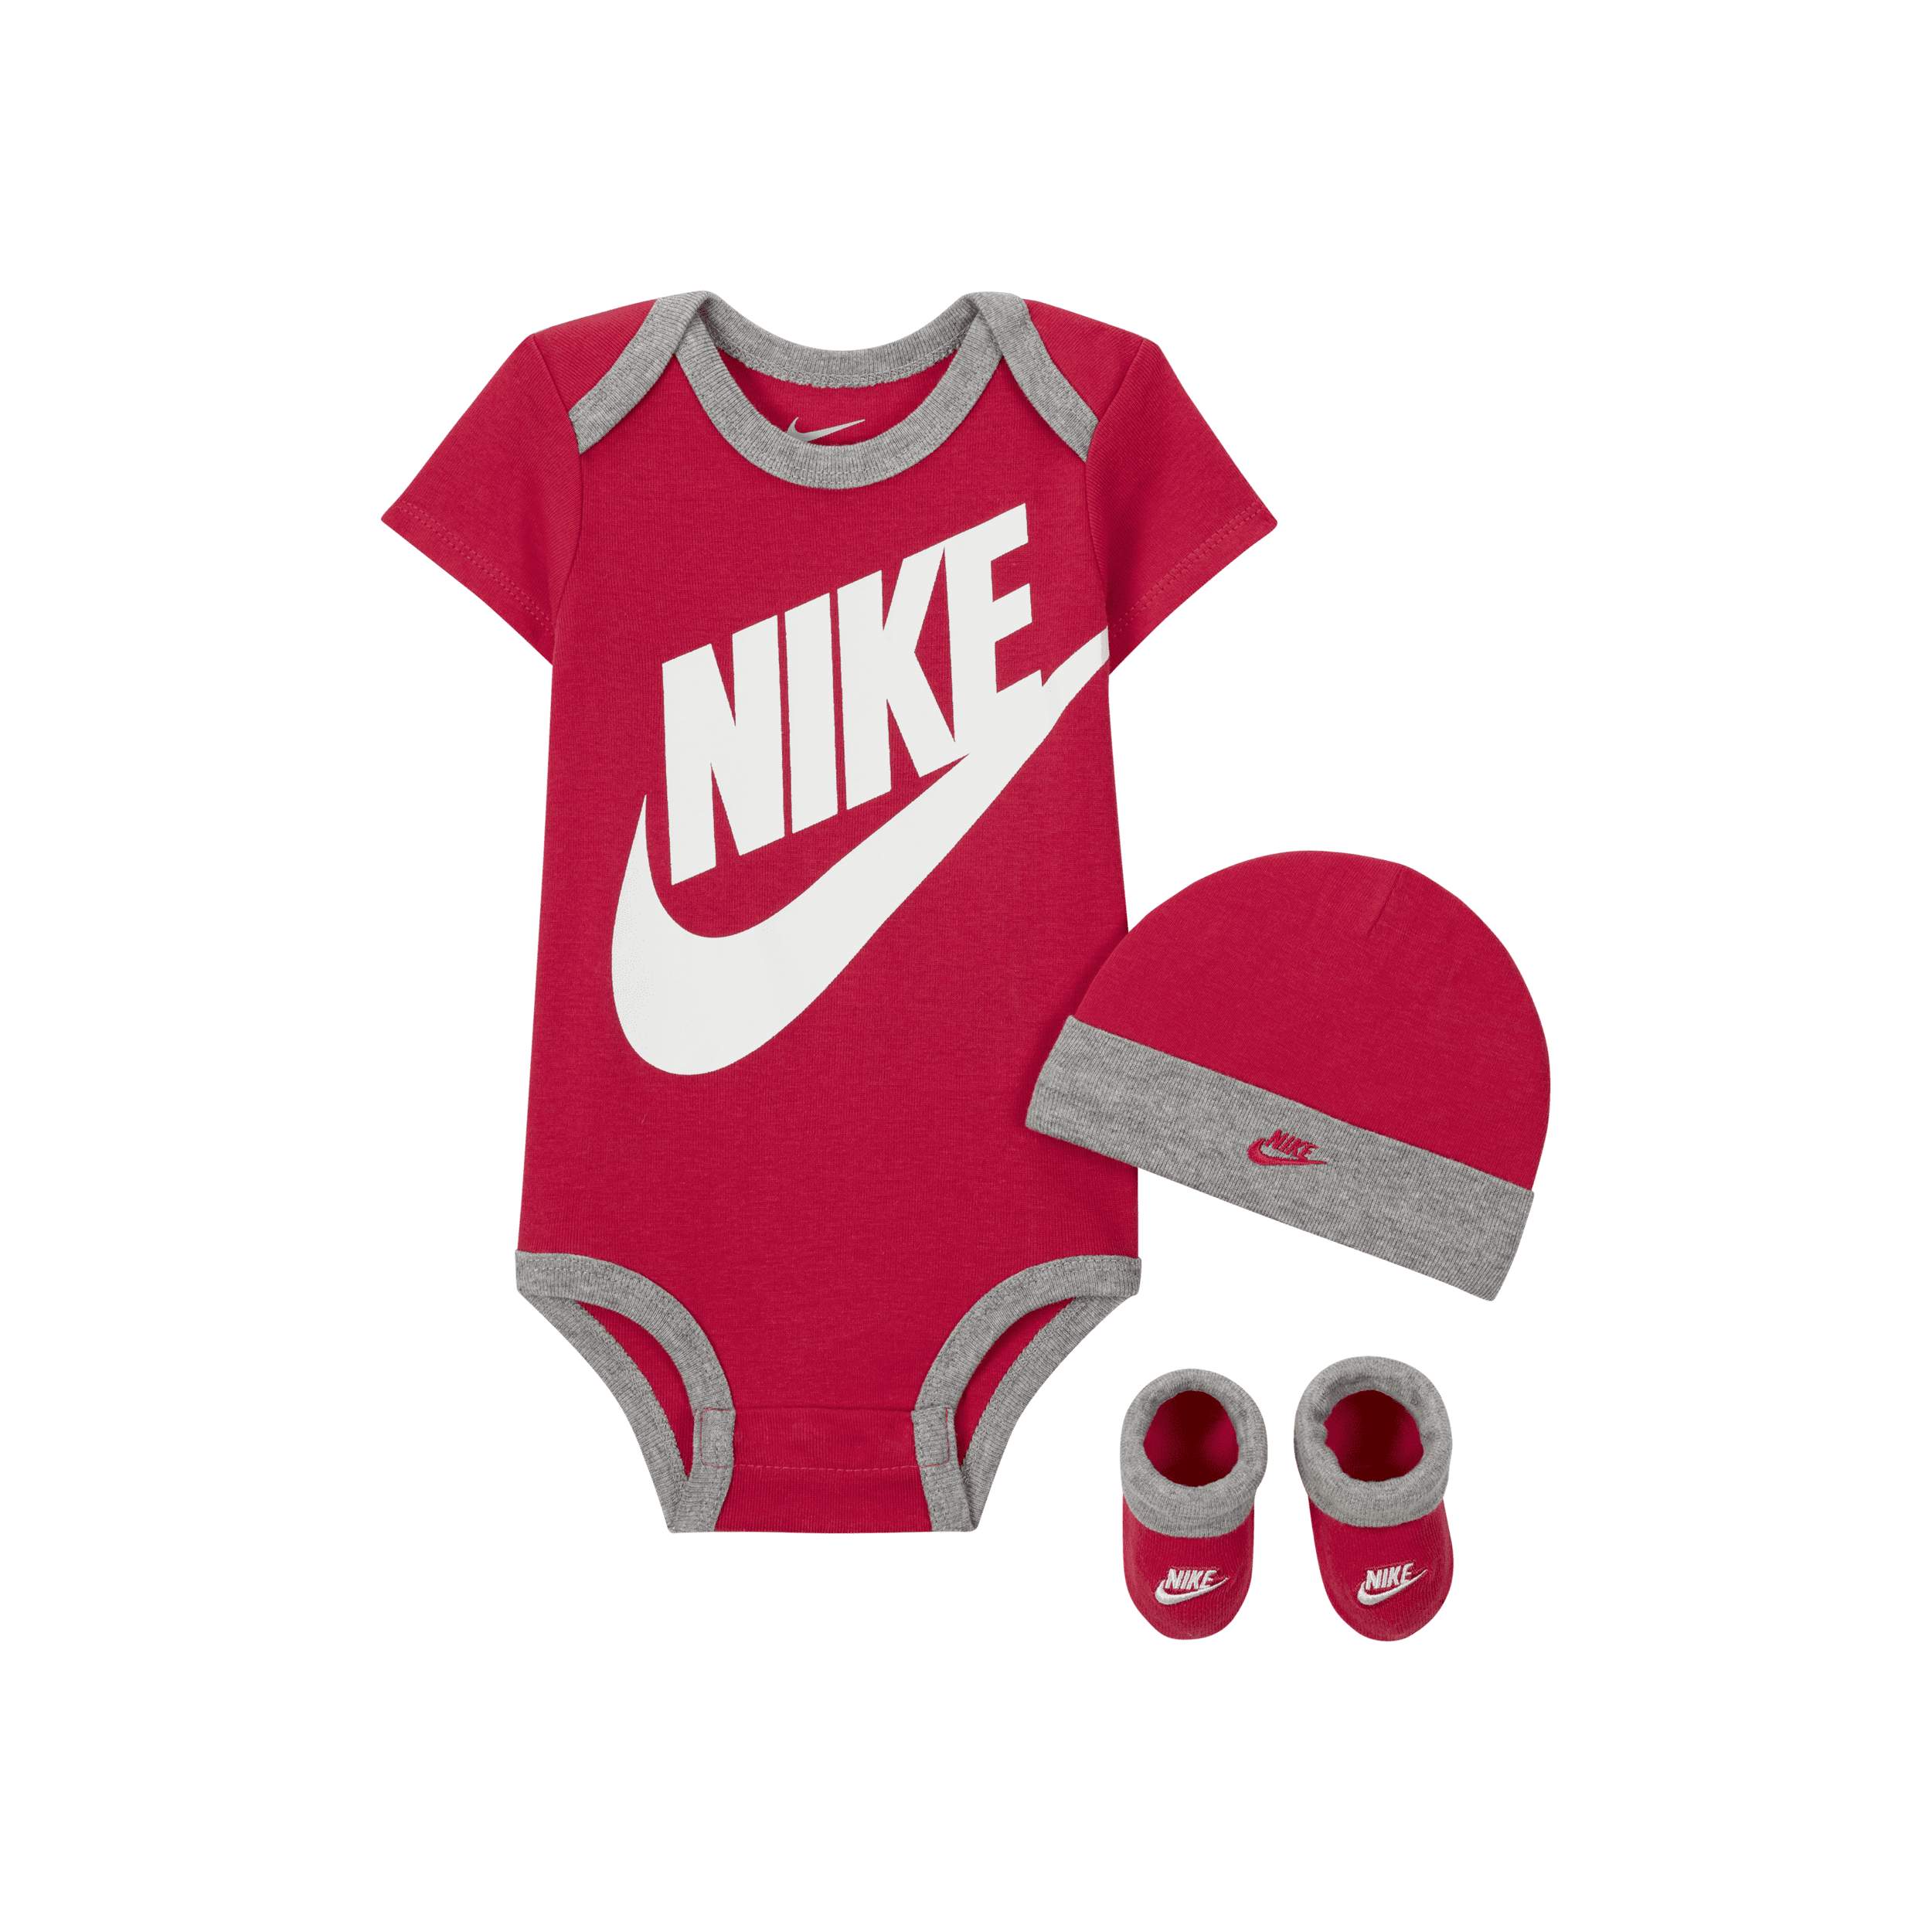 Nike Driedelige babyset (0-6 maanden) - Roze